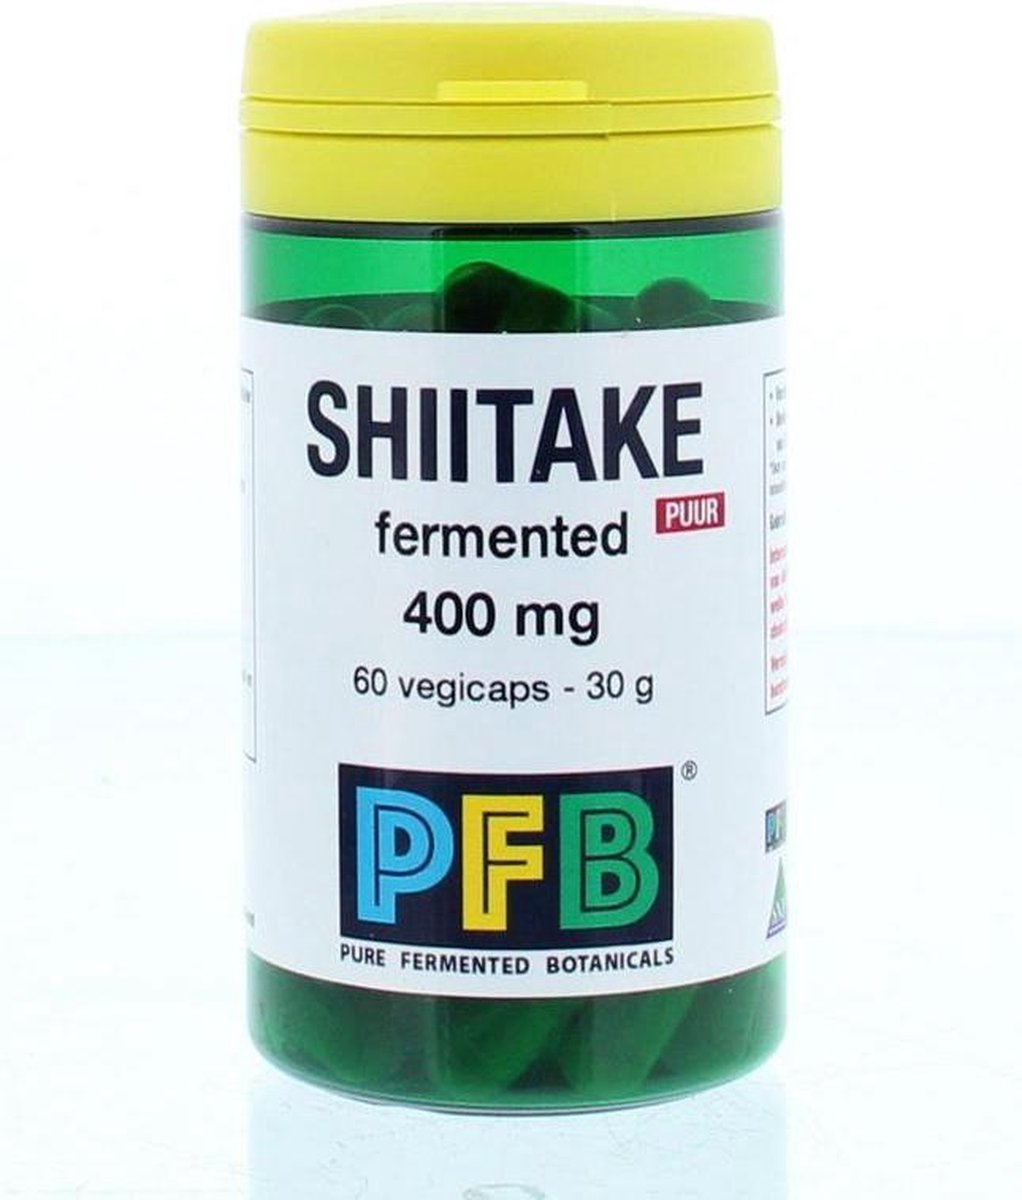 Snp shiitake fermented 400mg puur